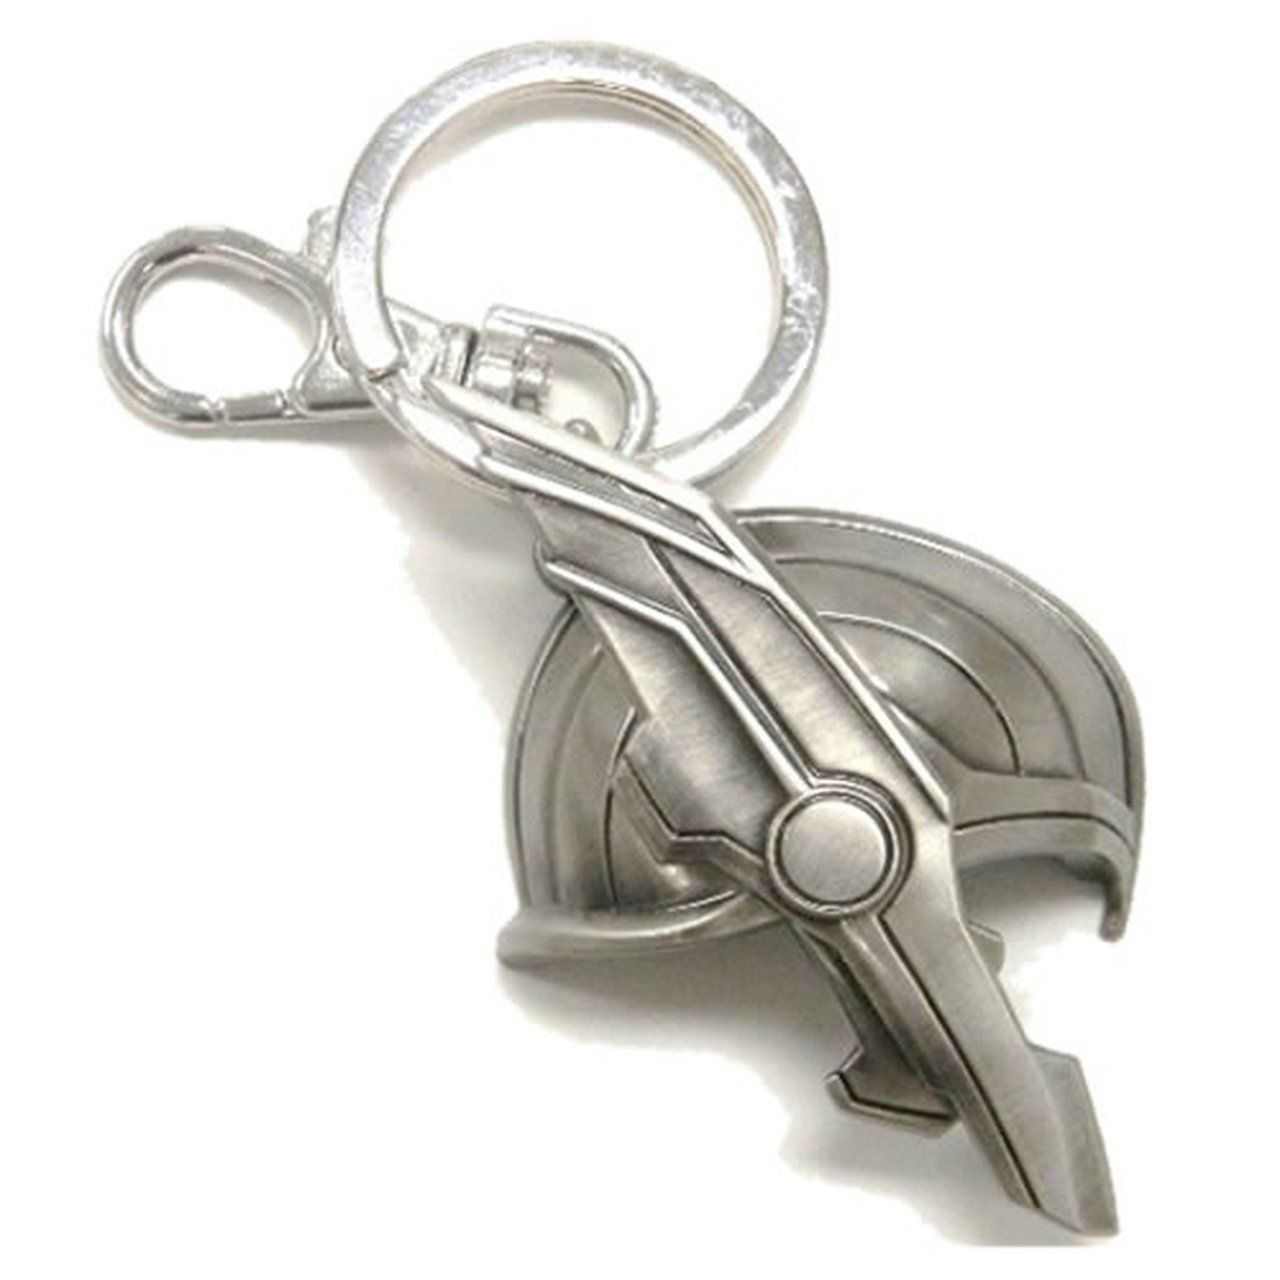 Chaveiro (Keychains) Elmo Do Thor (Thor Helmet): Thor Ragnarok - Monogram